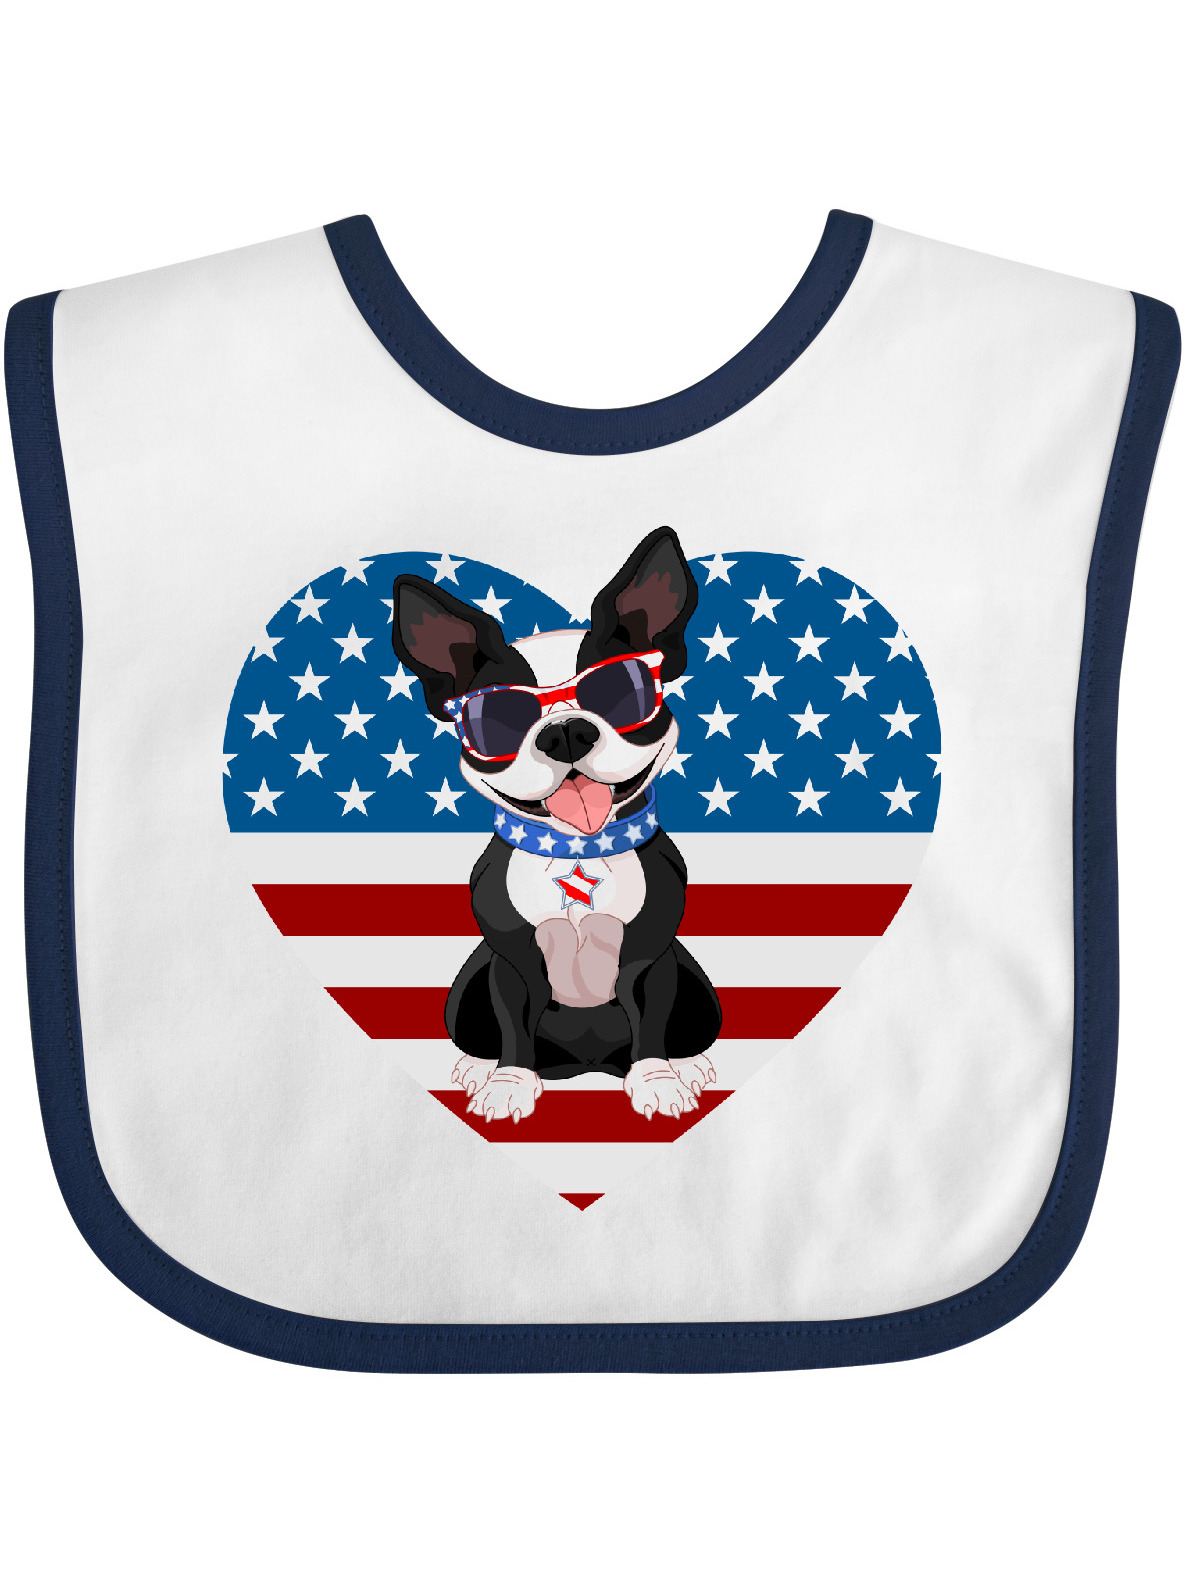 Inktastic Boston Terrier Dog US Flag July 4th Boys or Girls Baby Bib - image 1 of 3